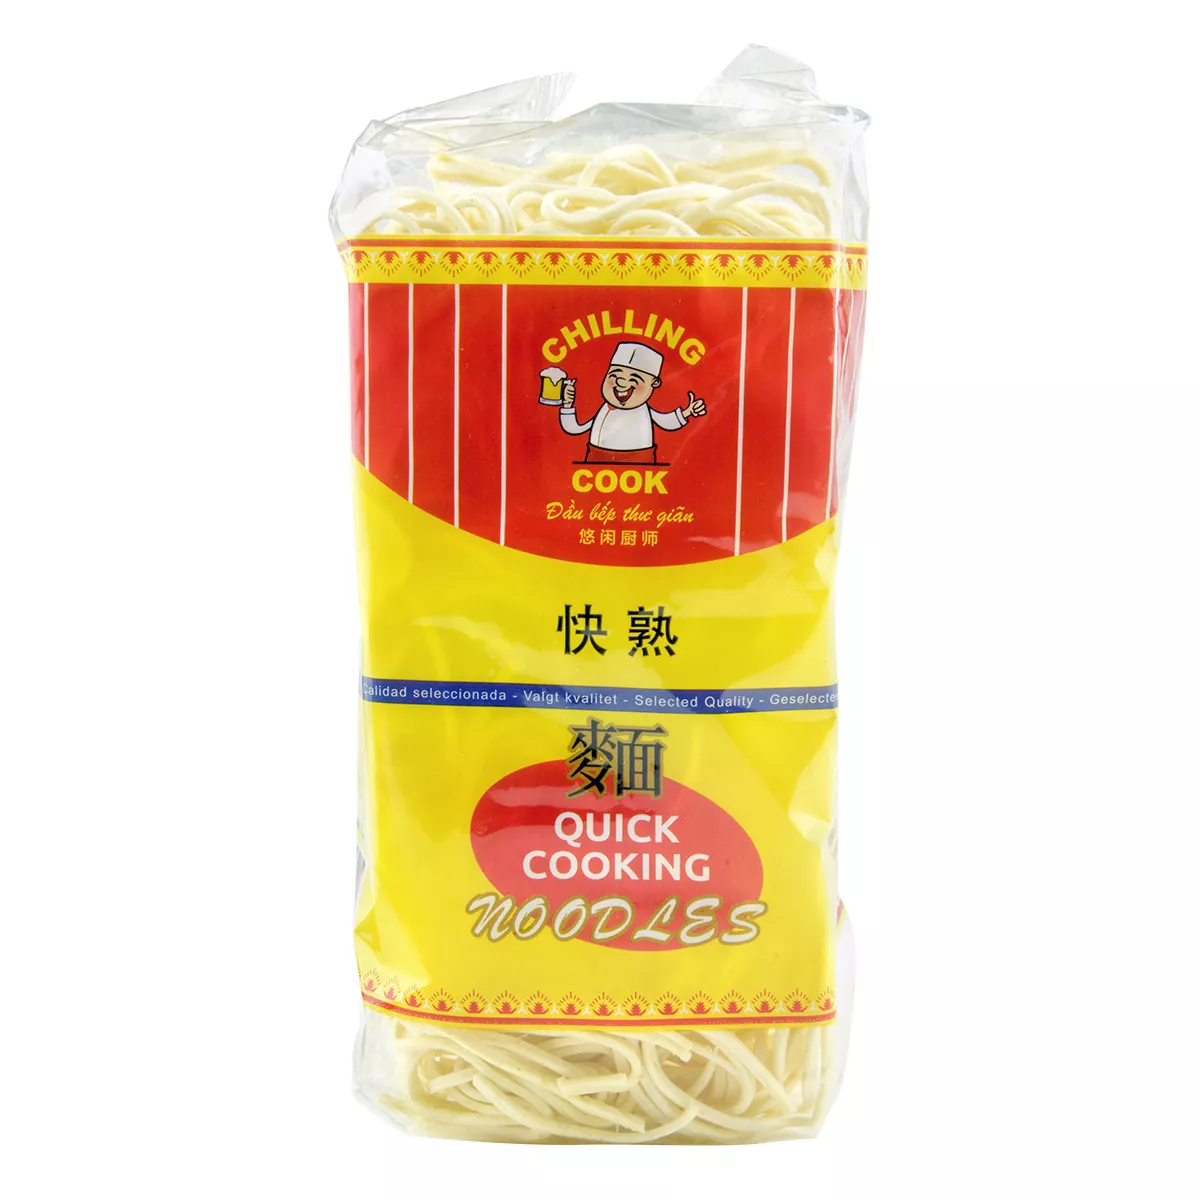 Taitei din grau (ramen noodles) CC 500g, [],asianfood.ro